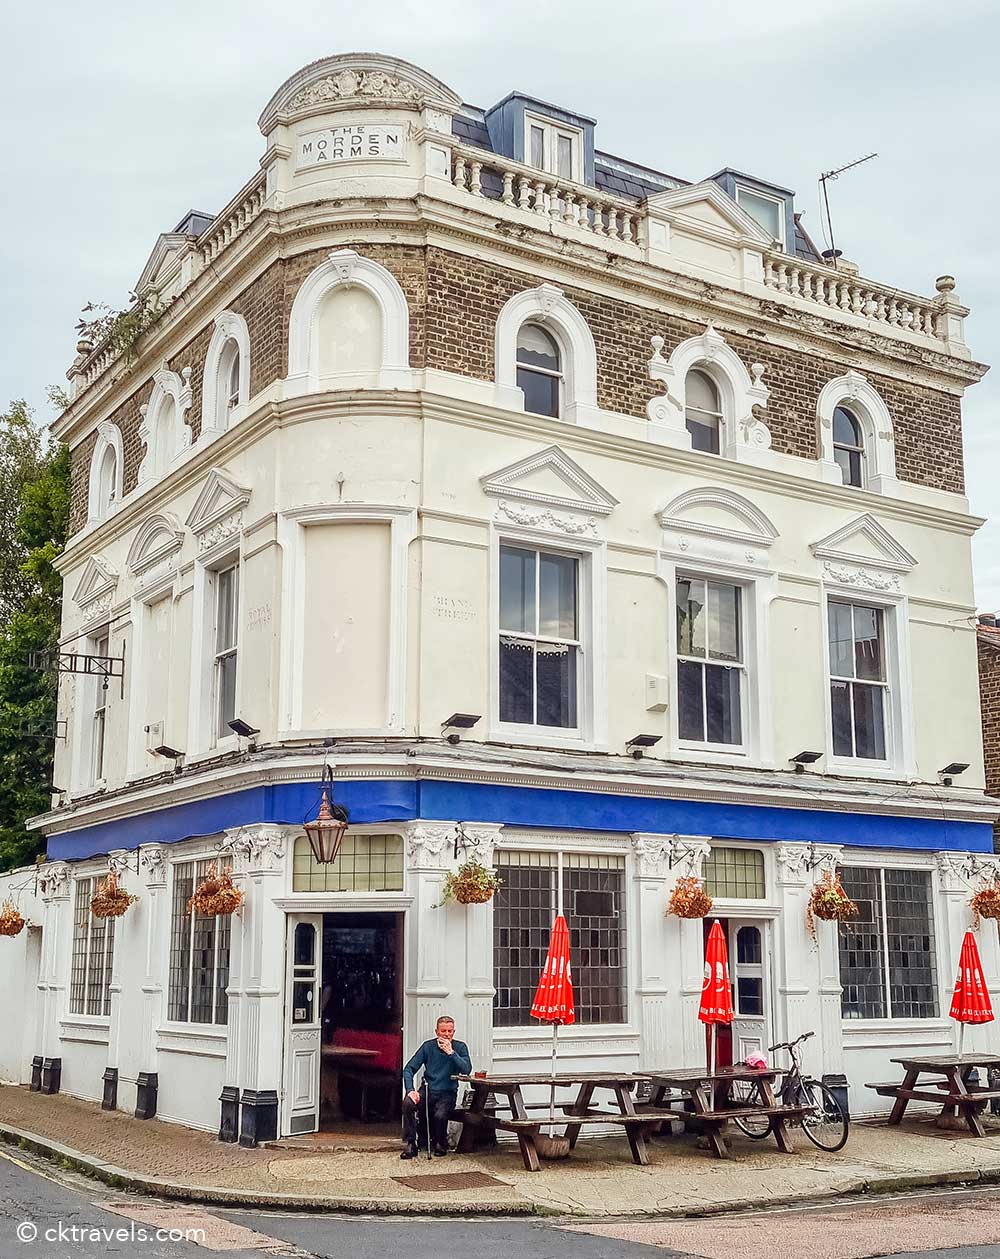 The Morden Arms pub London